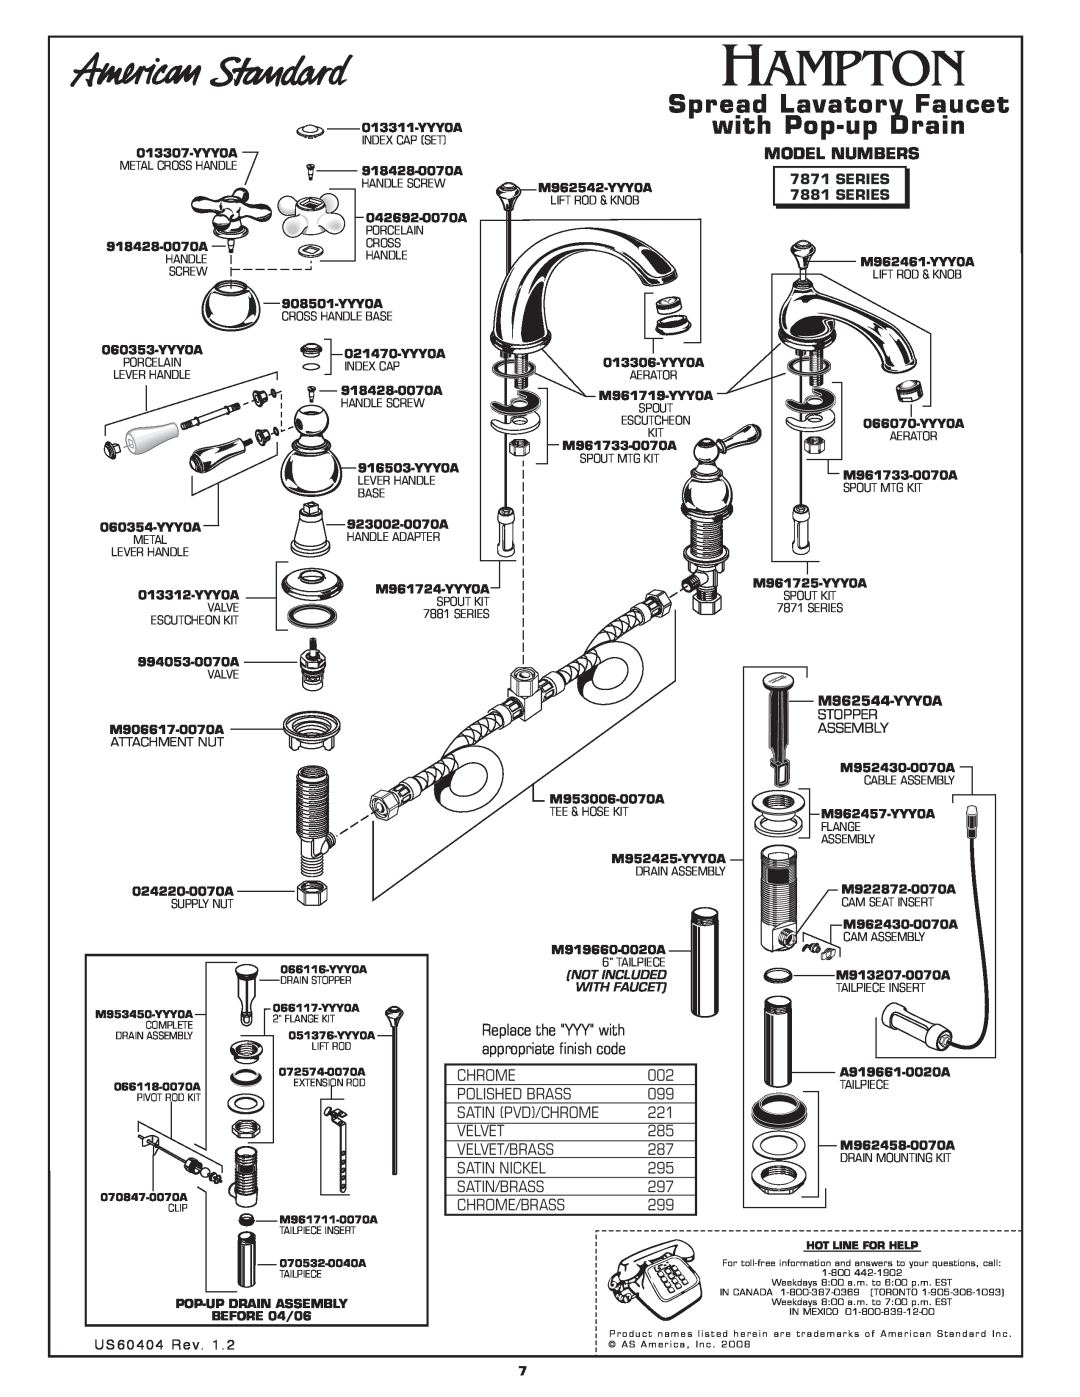 American Standard 7881 SERIES, 7871 SERIES manual Spread Lavatory Faucet with Pop-upDrain, Model Numbers 